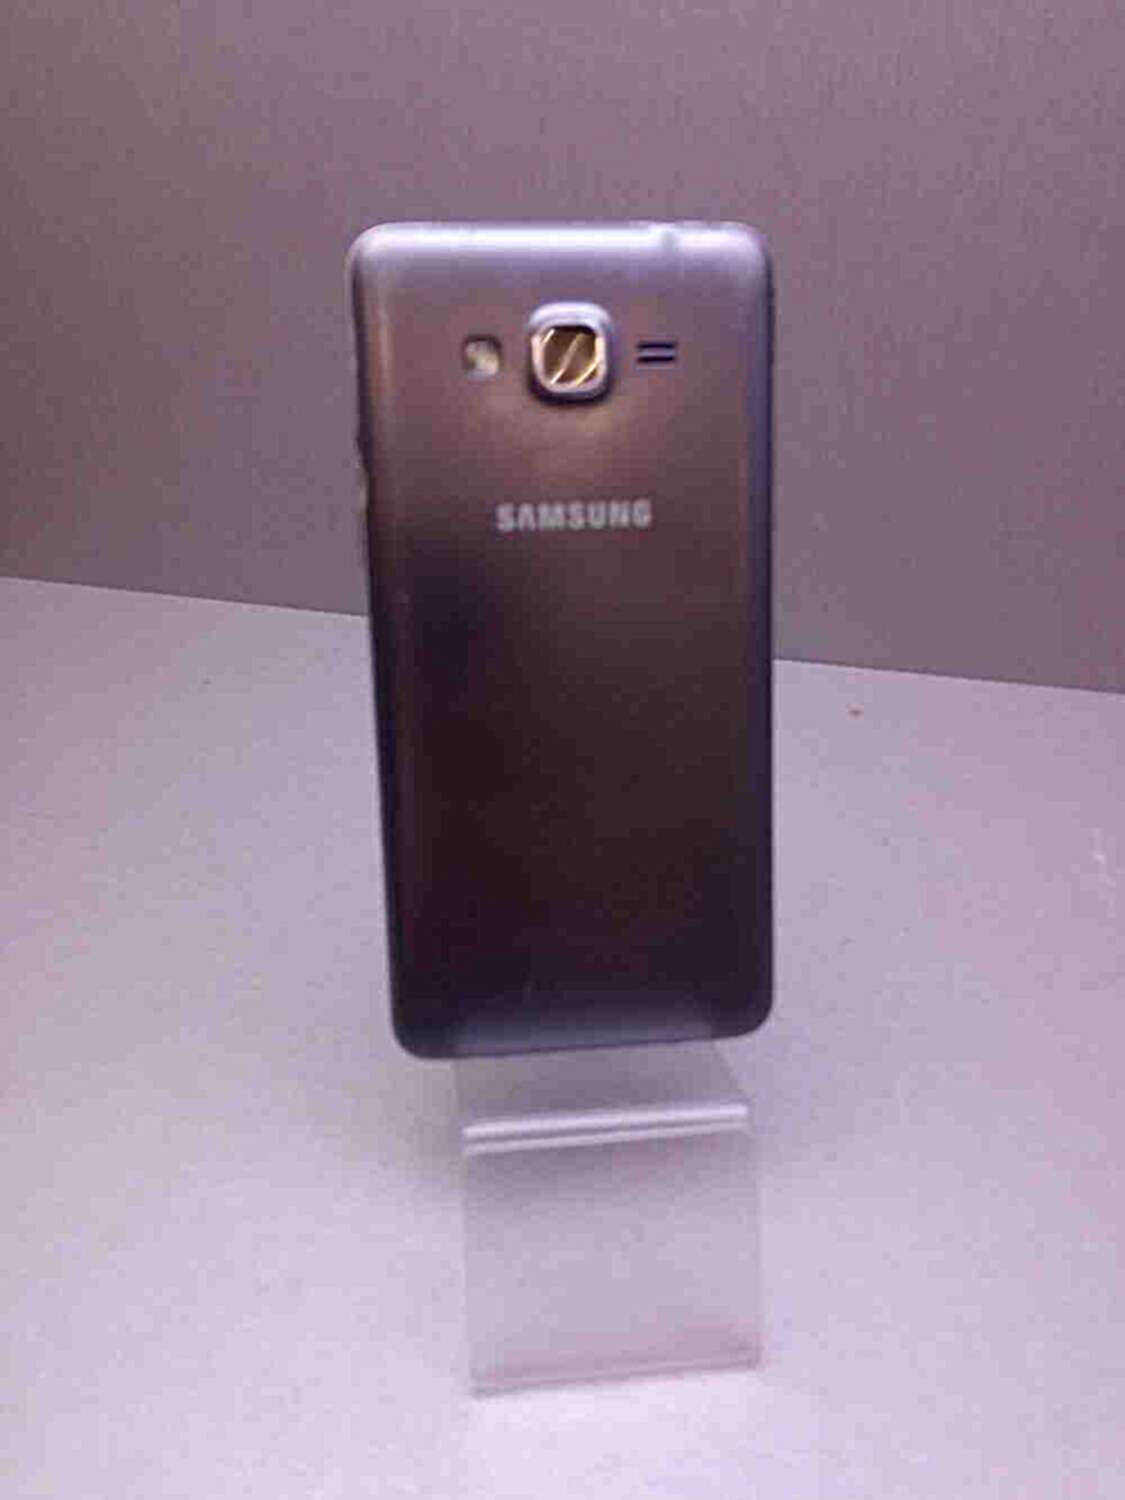 Samsung Galaxy Grand Prime VE (SM-G531H) 1/8Gb 9